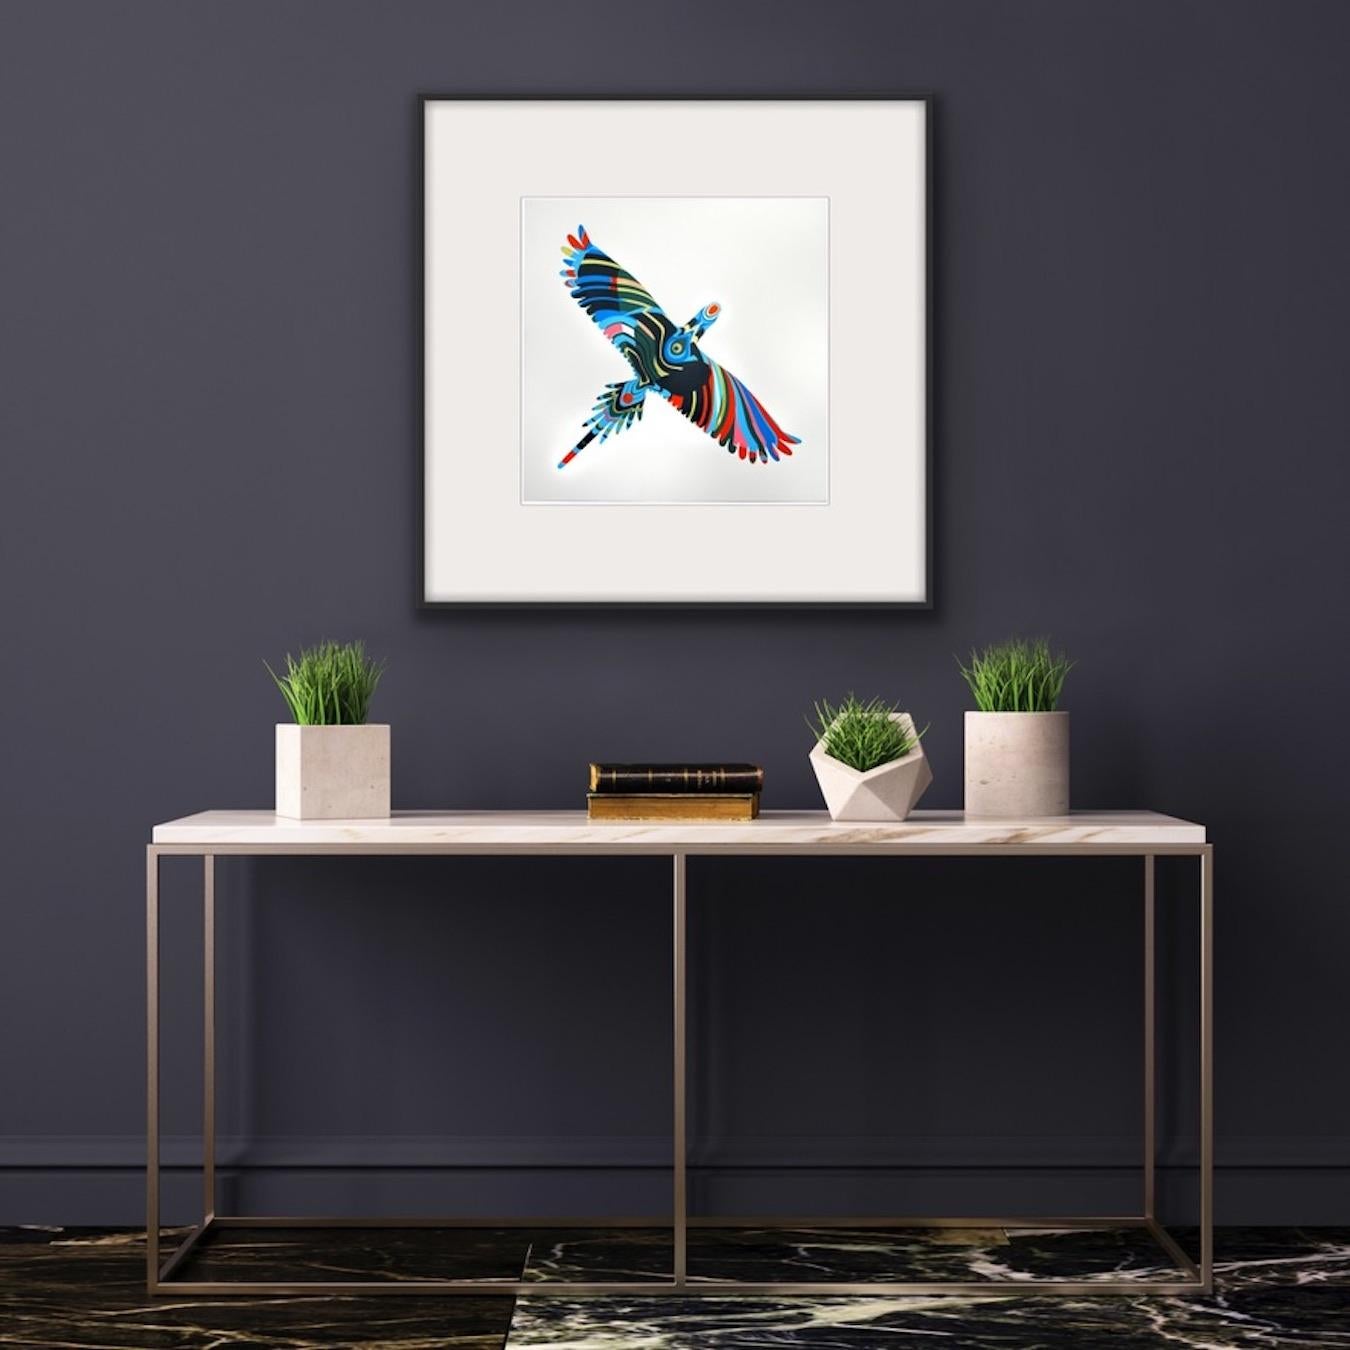 The Gift of Flight, Chris Keegan, Limited edition screen print, Pop art for sale - Print by Chris Keegan 